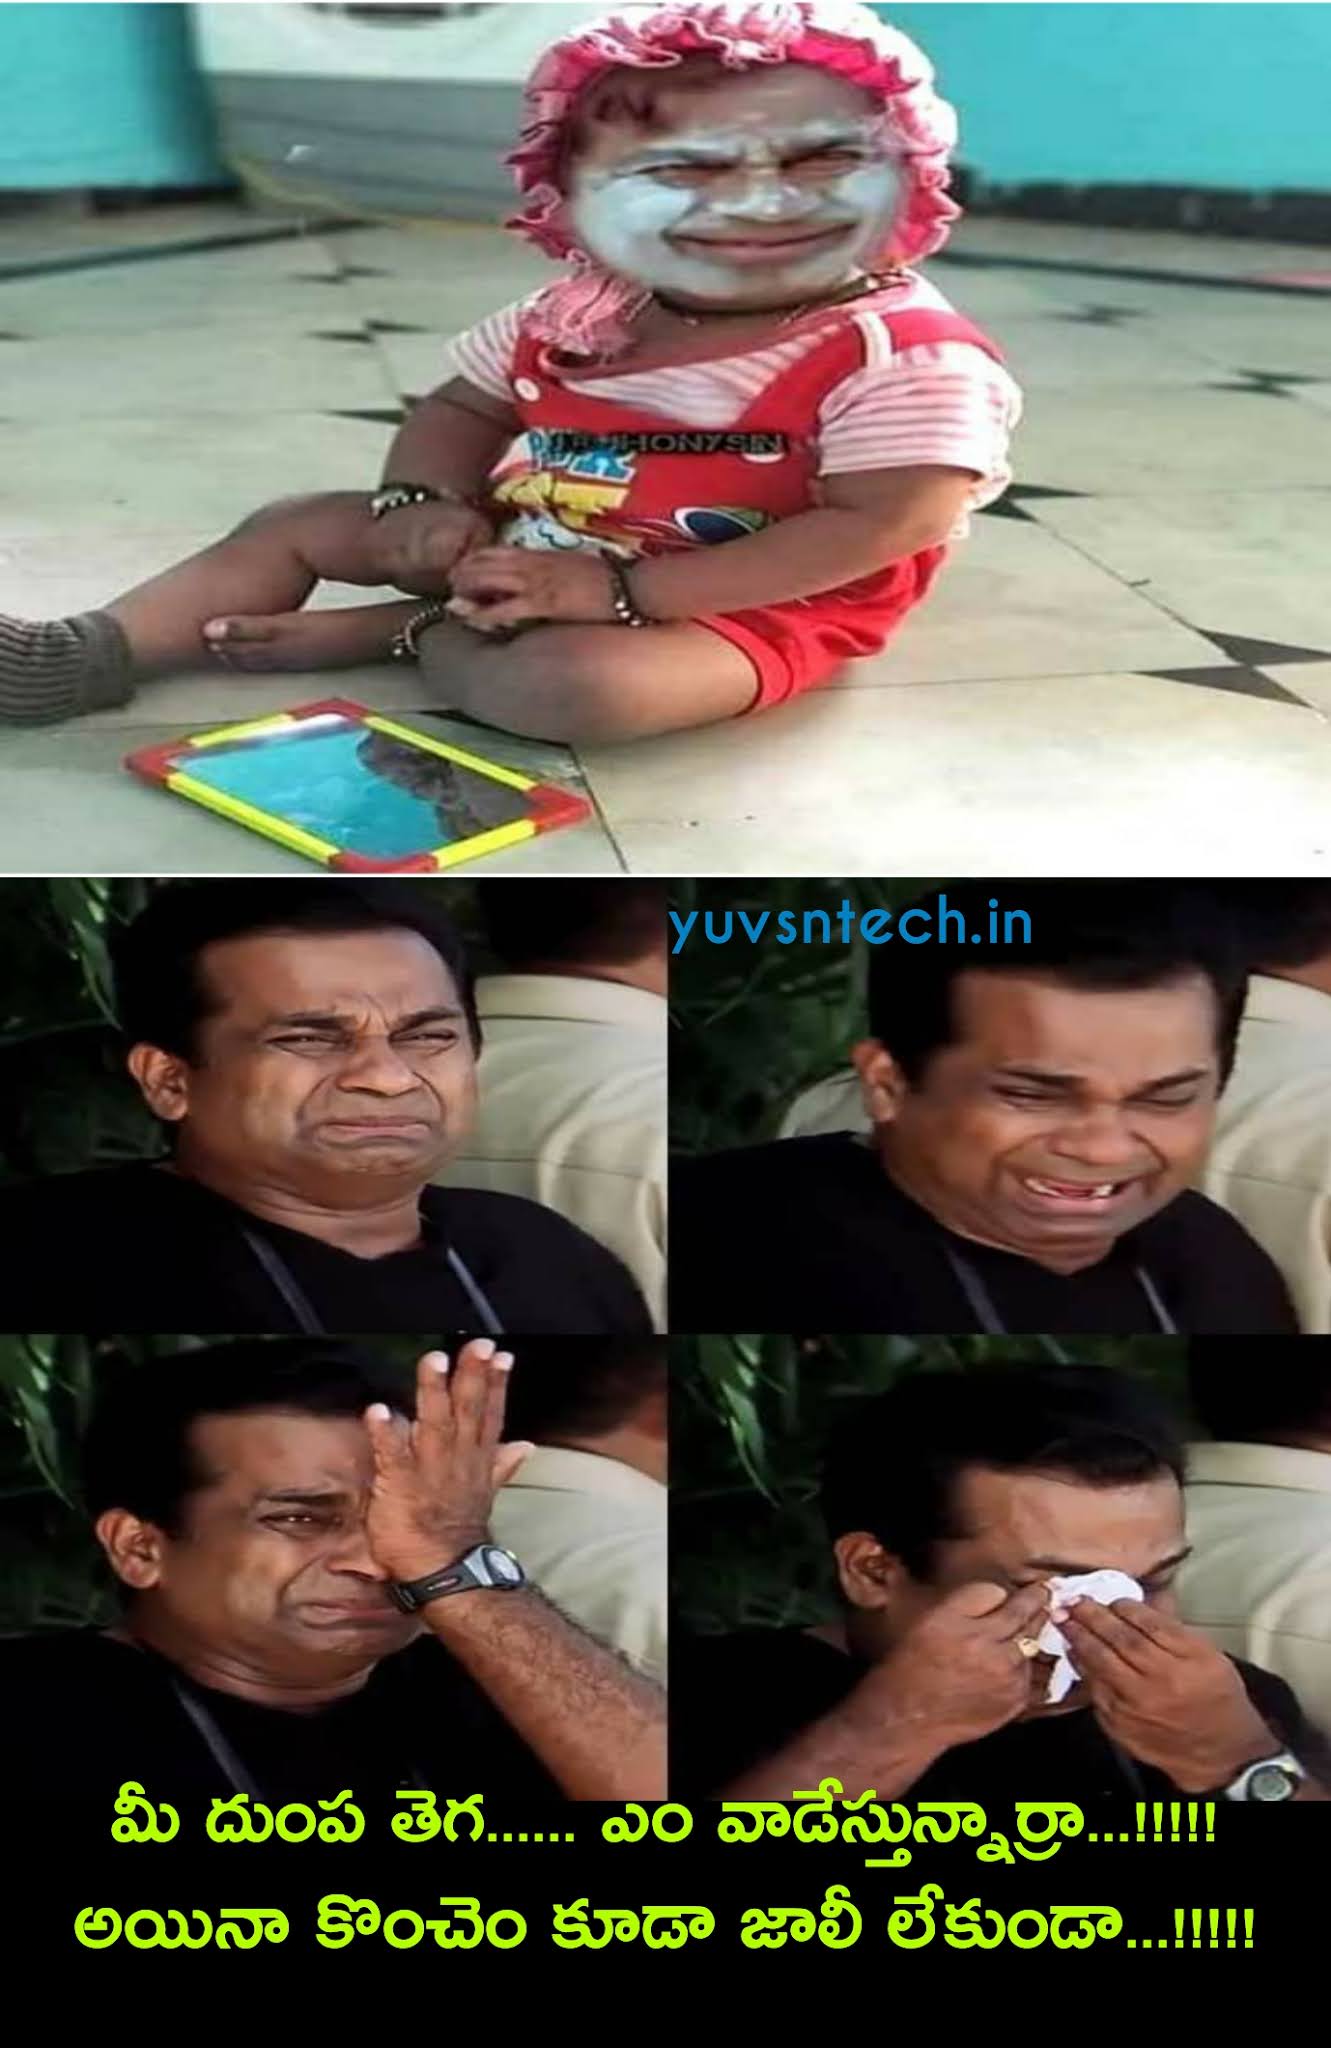 How Brahmi looked at his photo and reacted - Hilarious Telugu Jokes-English  Jokes | Health Tips for Telugu